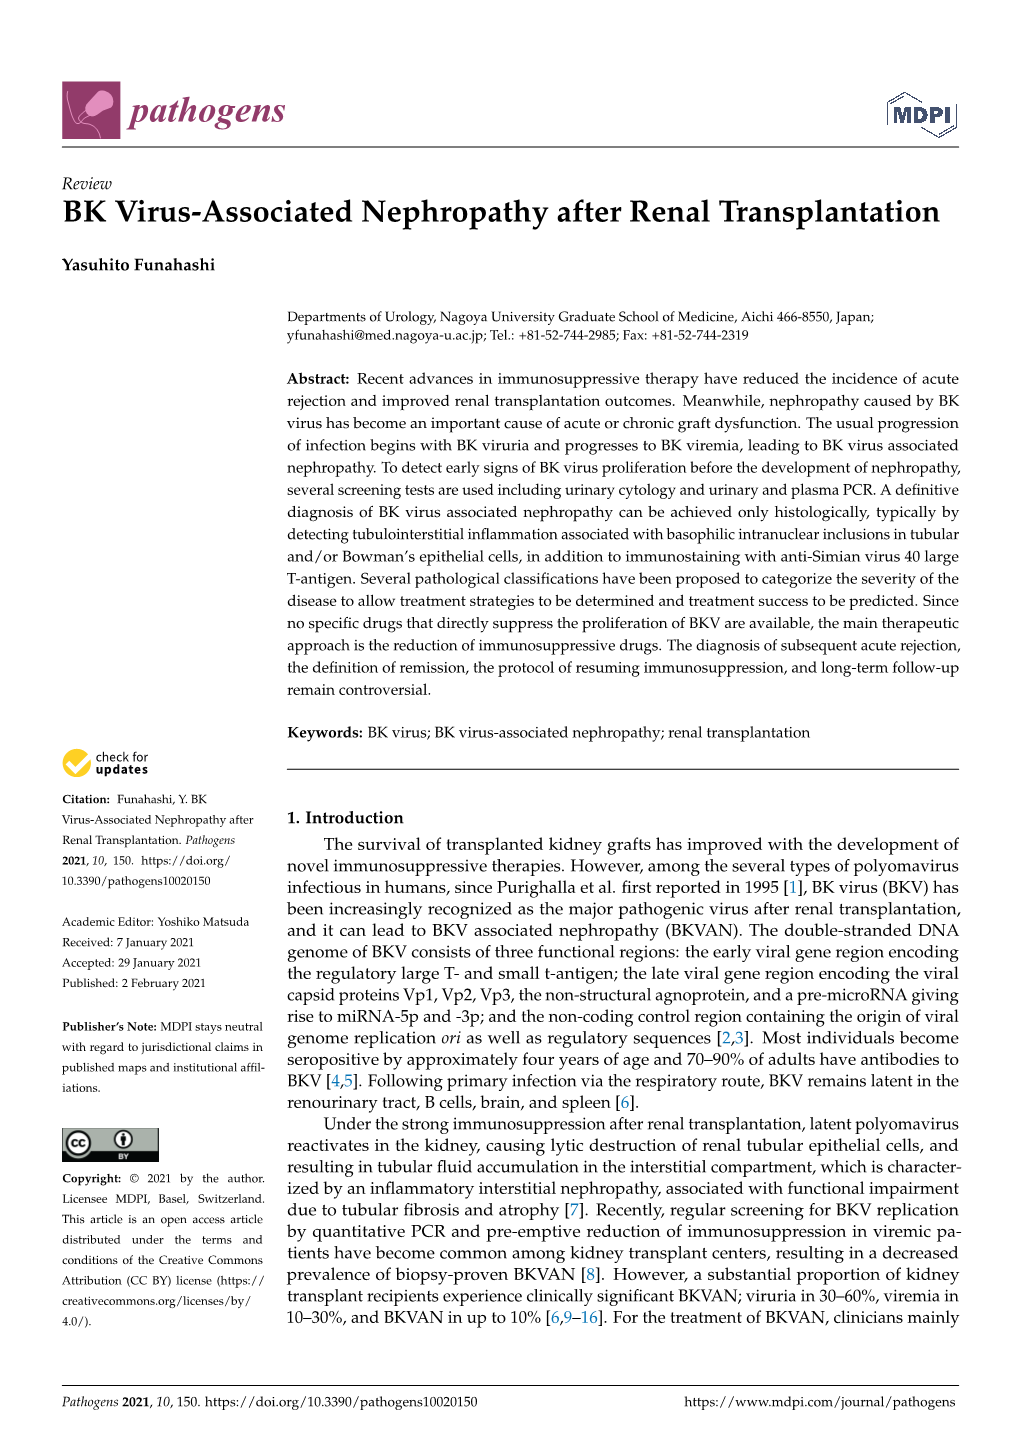 BK Virus-Associated Nephropathy After Renal Transplantation